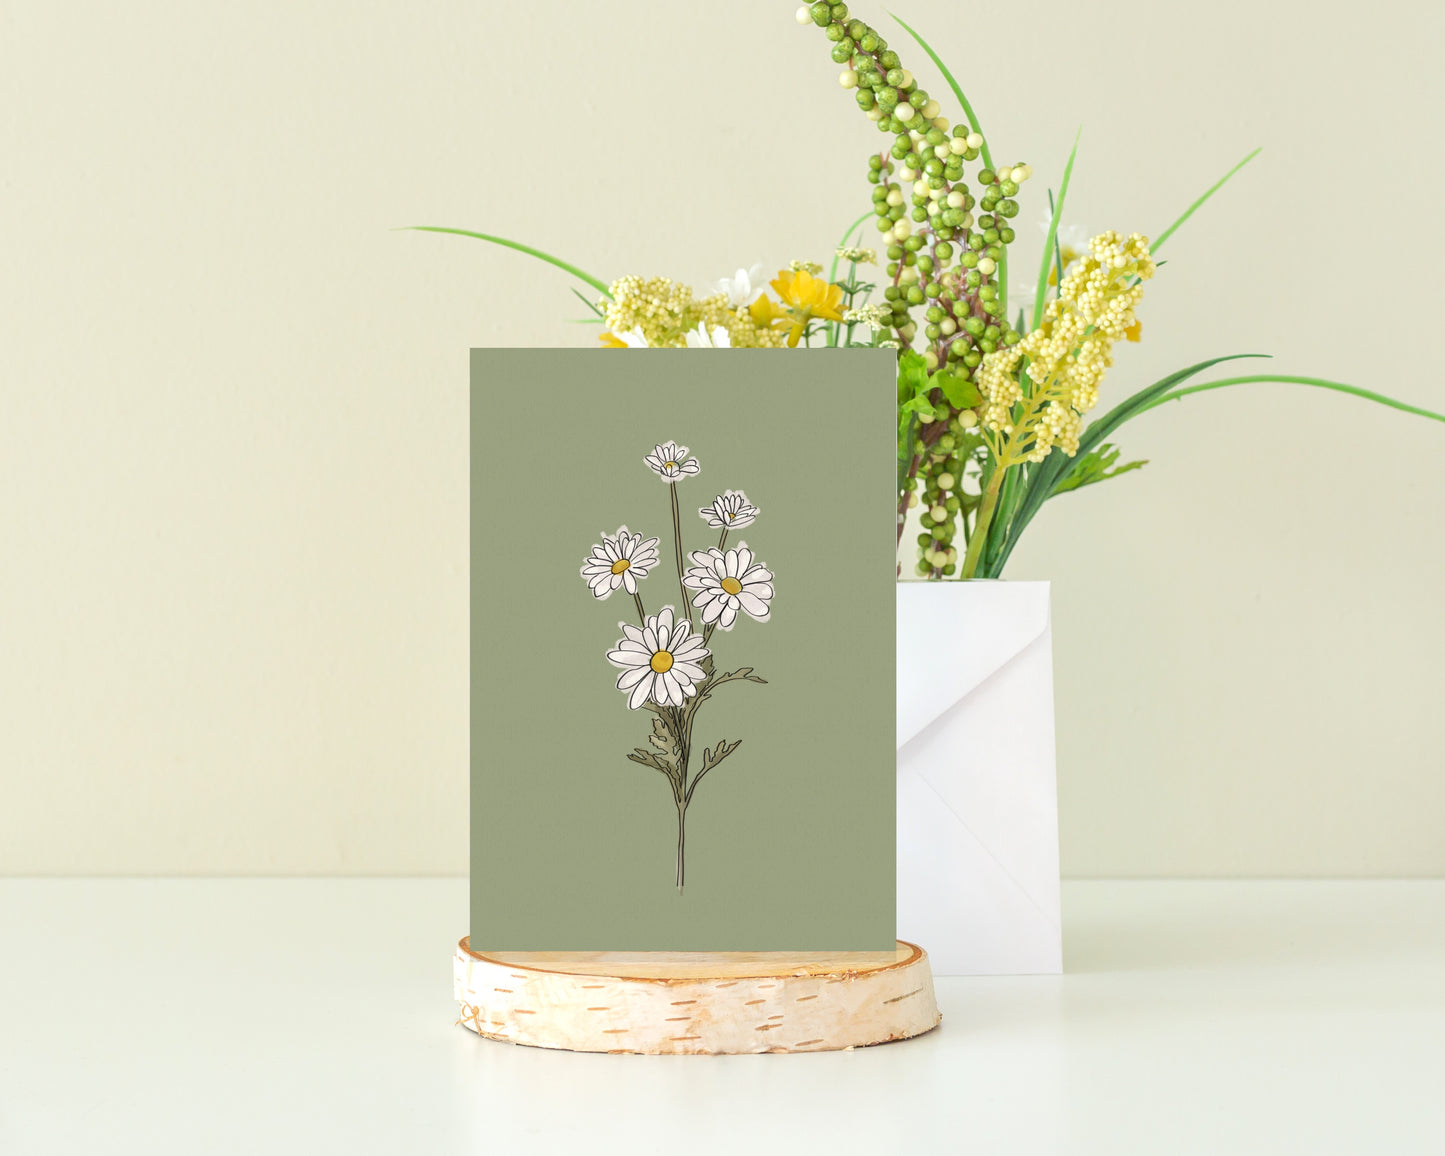 Daisy Wildflower Greeting Card